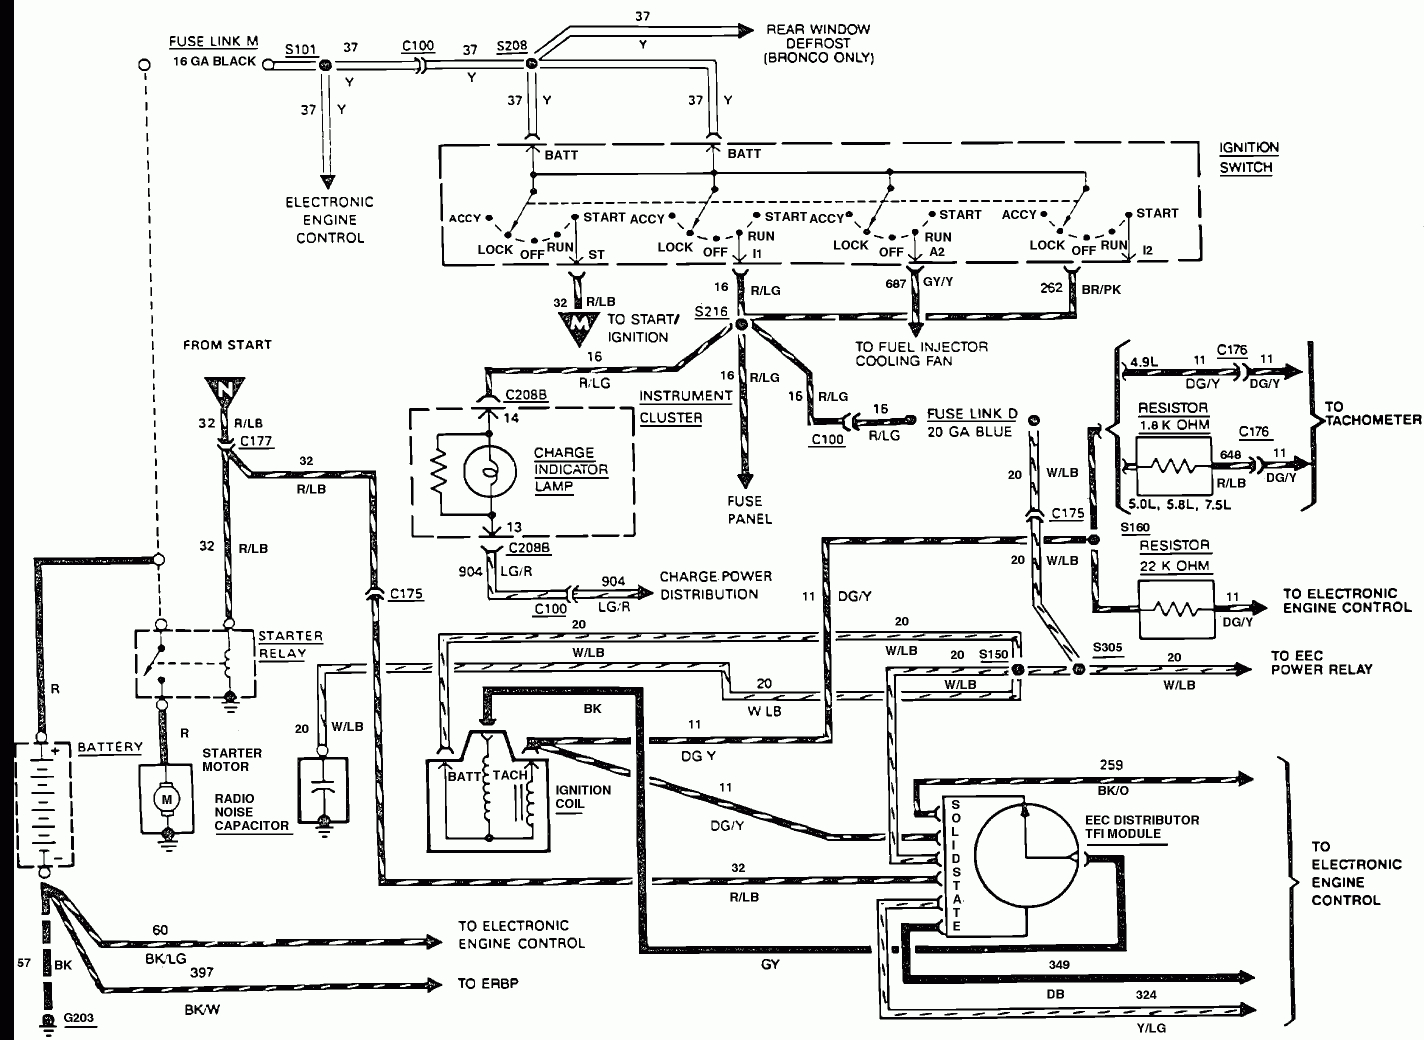 1989 Ford Truck Starter Wire Diagram | Wiring Diagram - Starter Wiring Diagram Ford